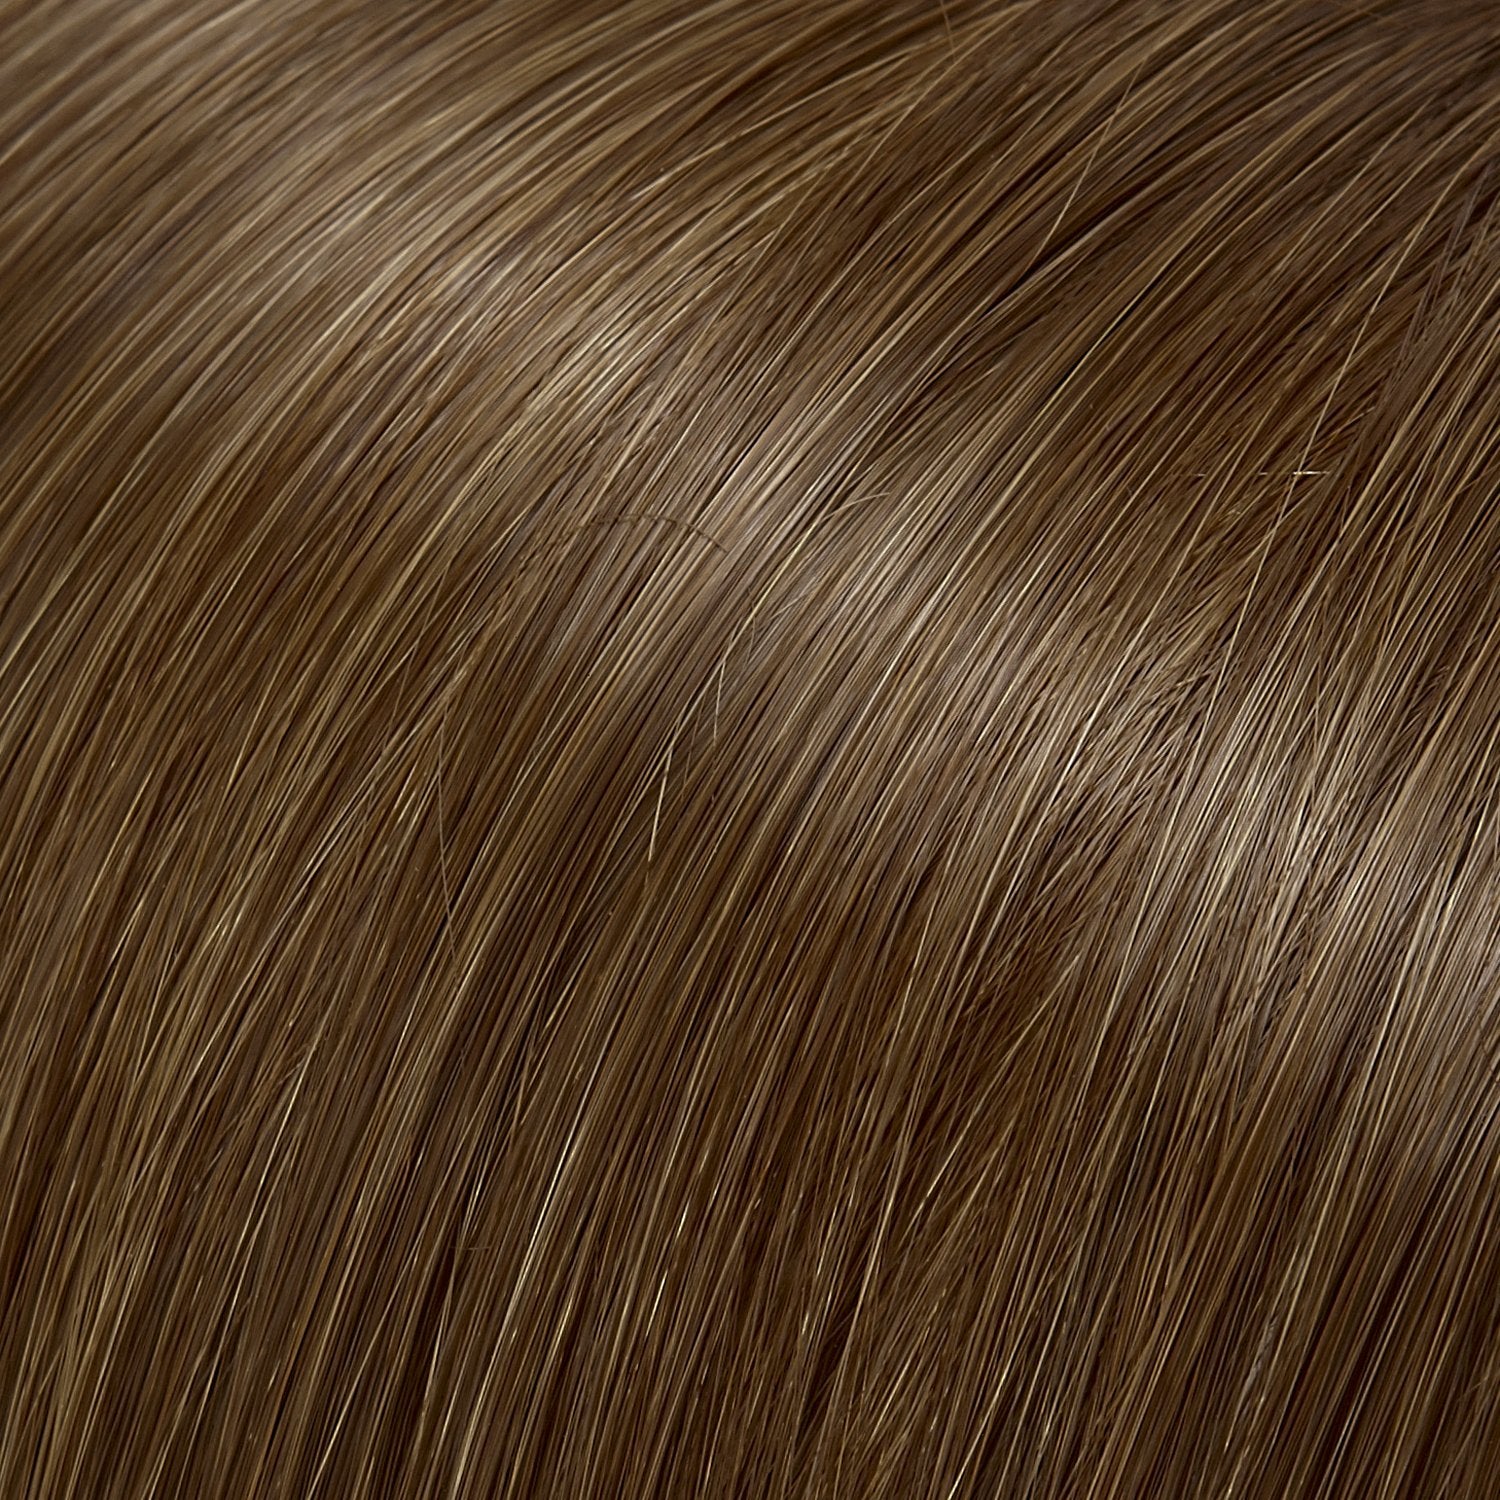 Skylar wig - Jon Renau HD Collection